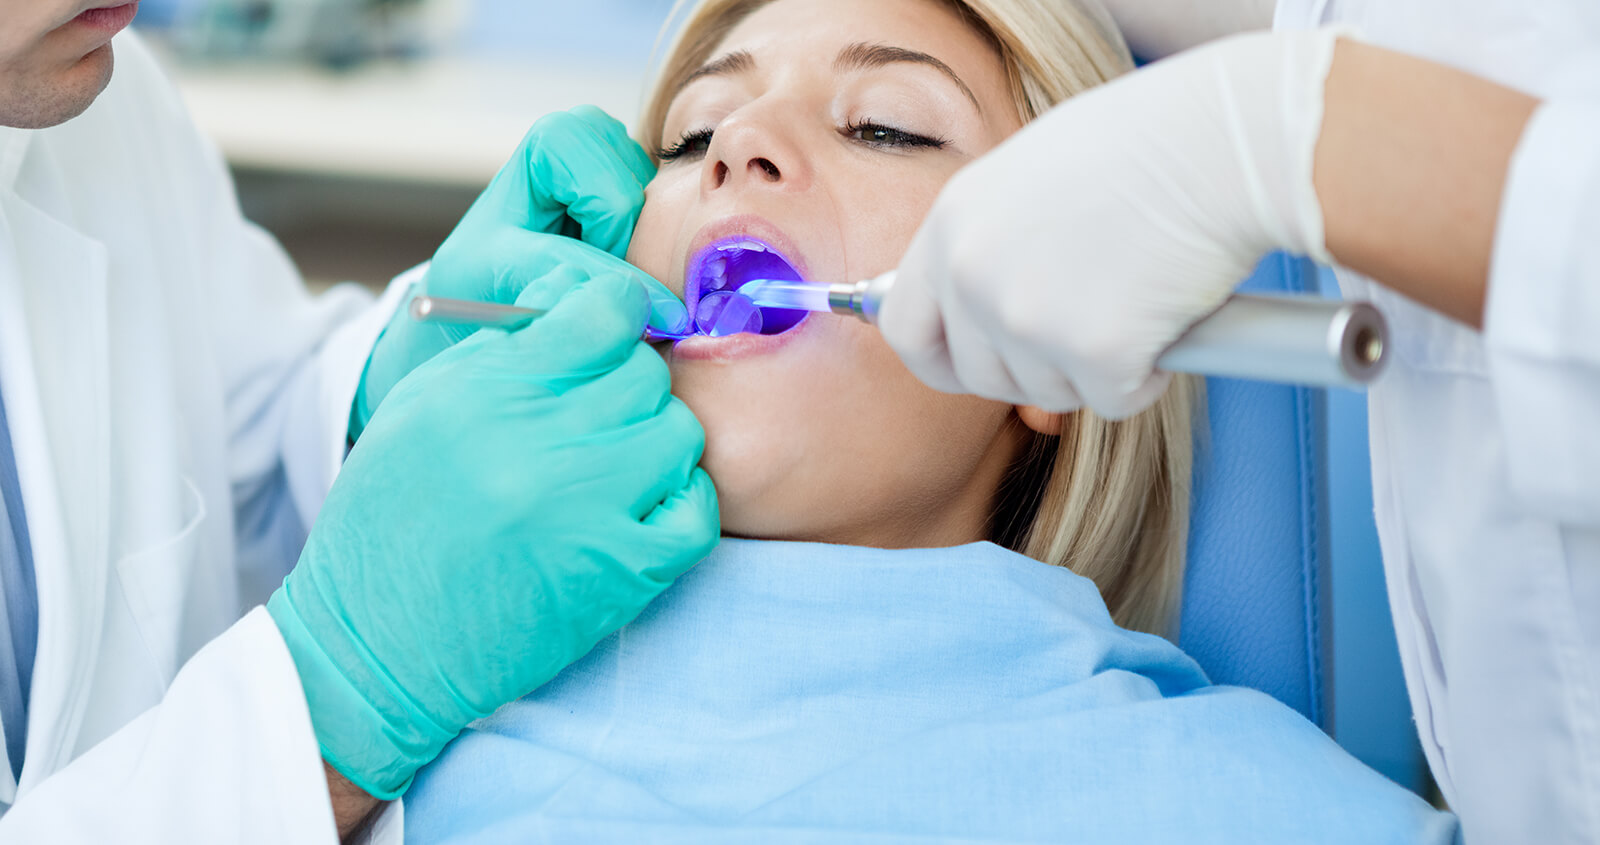 Ozone Treatment for Teeth Overland Park KS - Periodontal Treatments